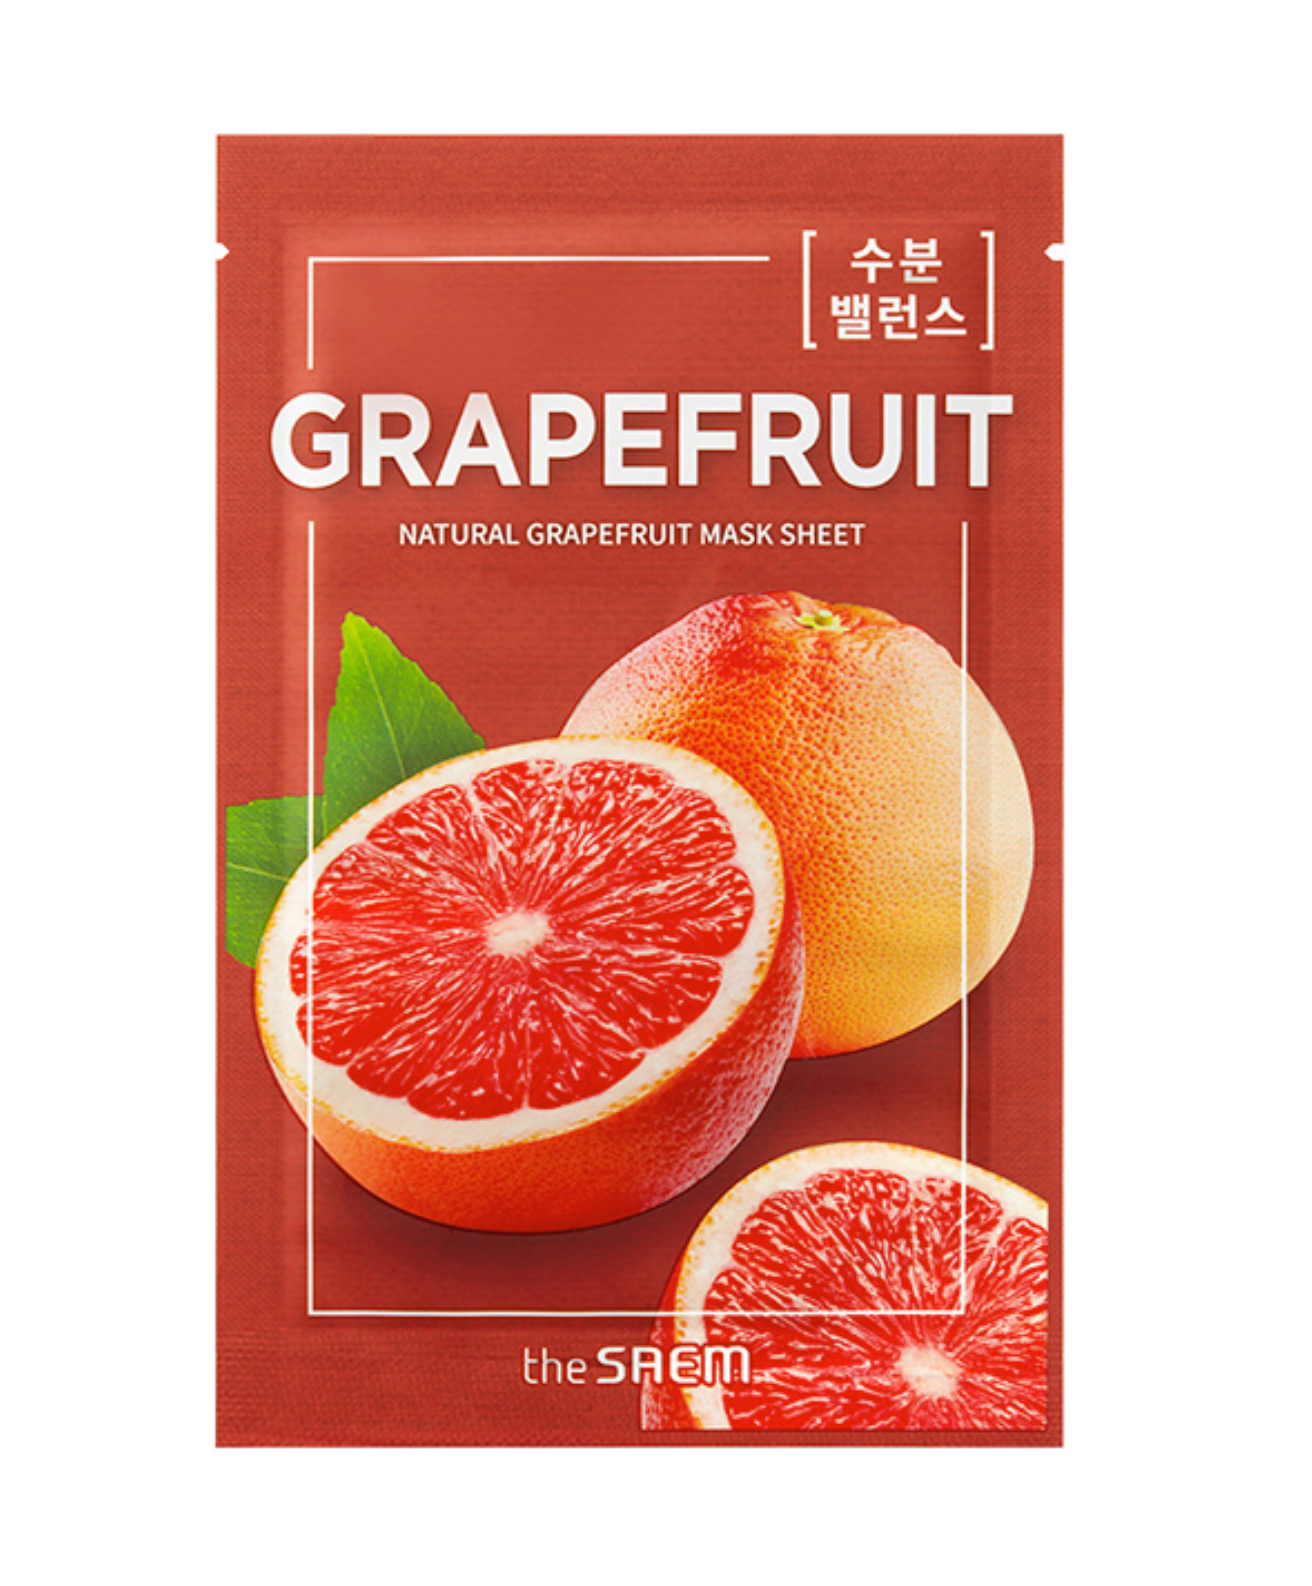 Natural Grapefruit Mask Sheet - Boosting